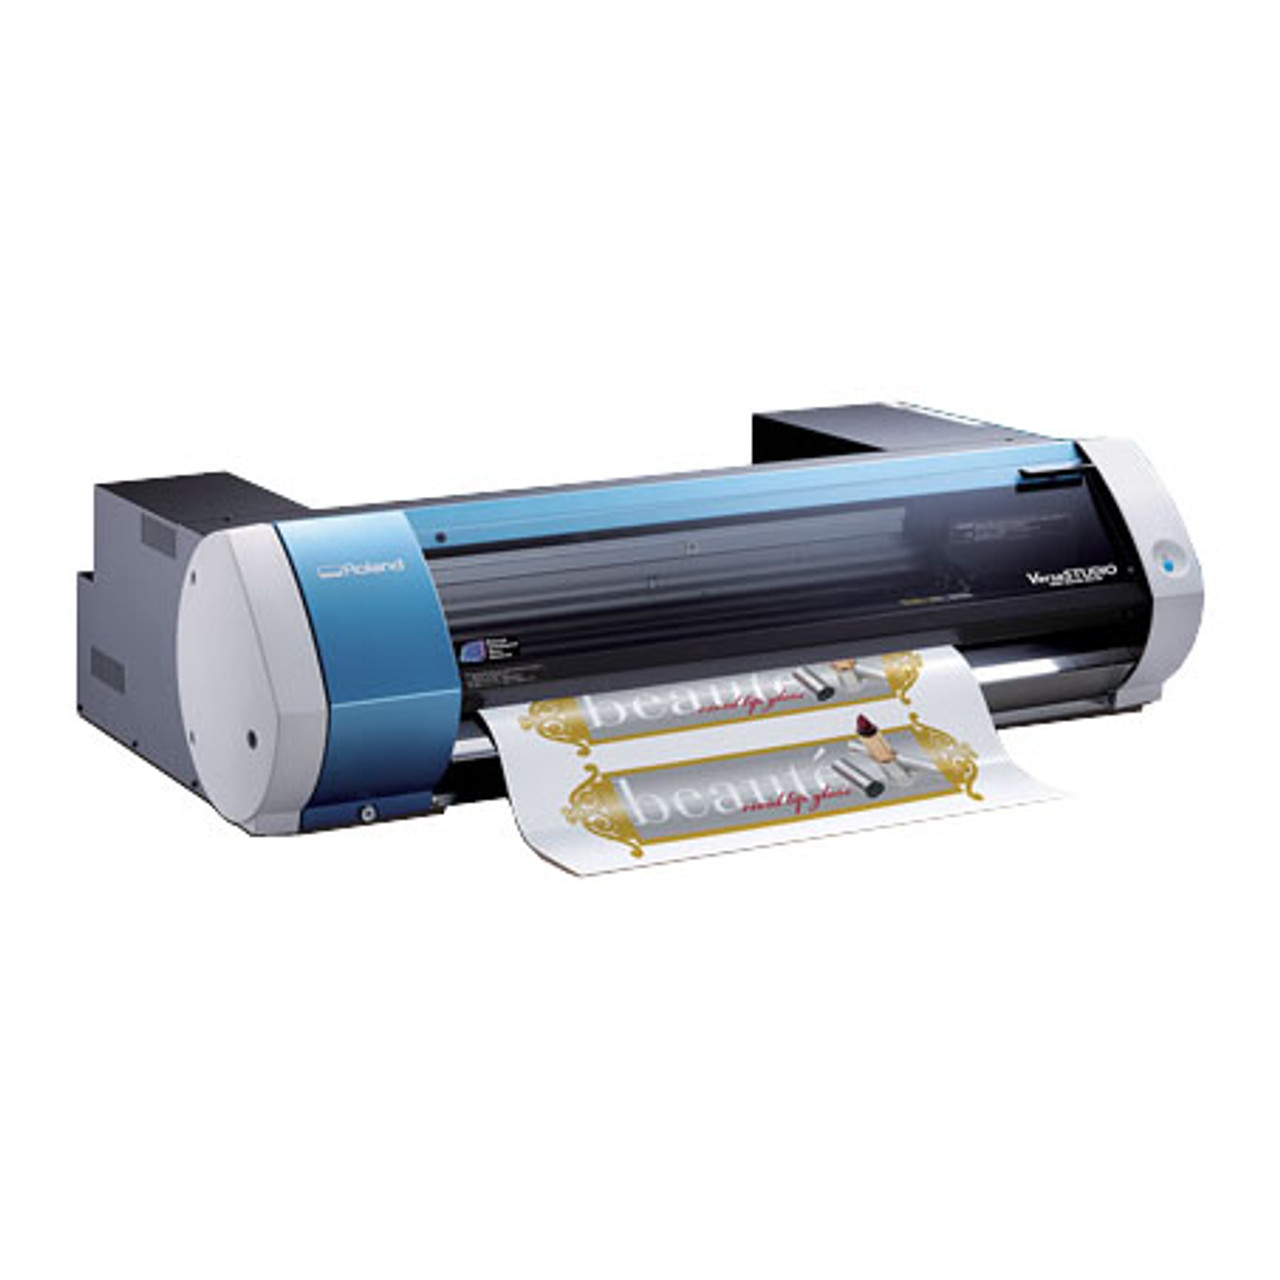 Roland Inkjet Printer/Cutter - BN-20